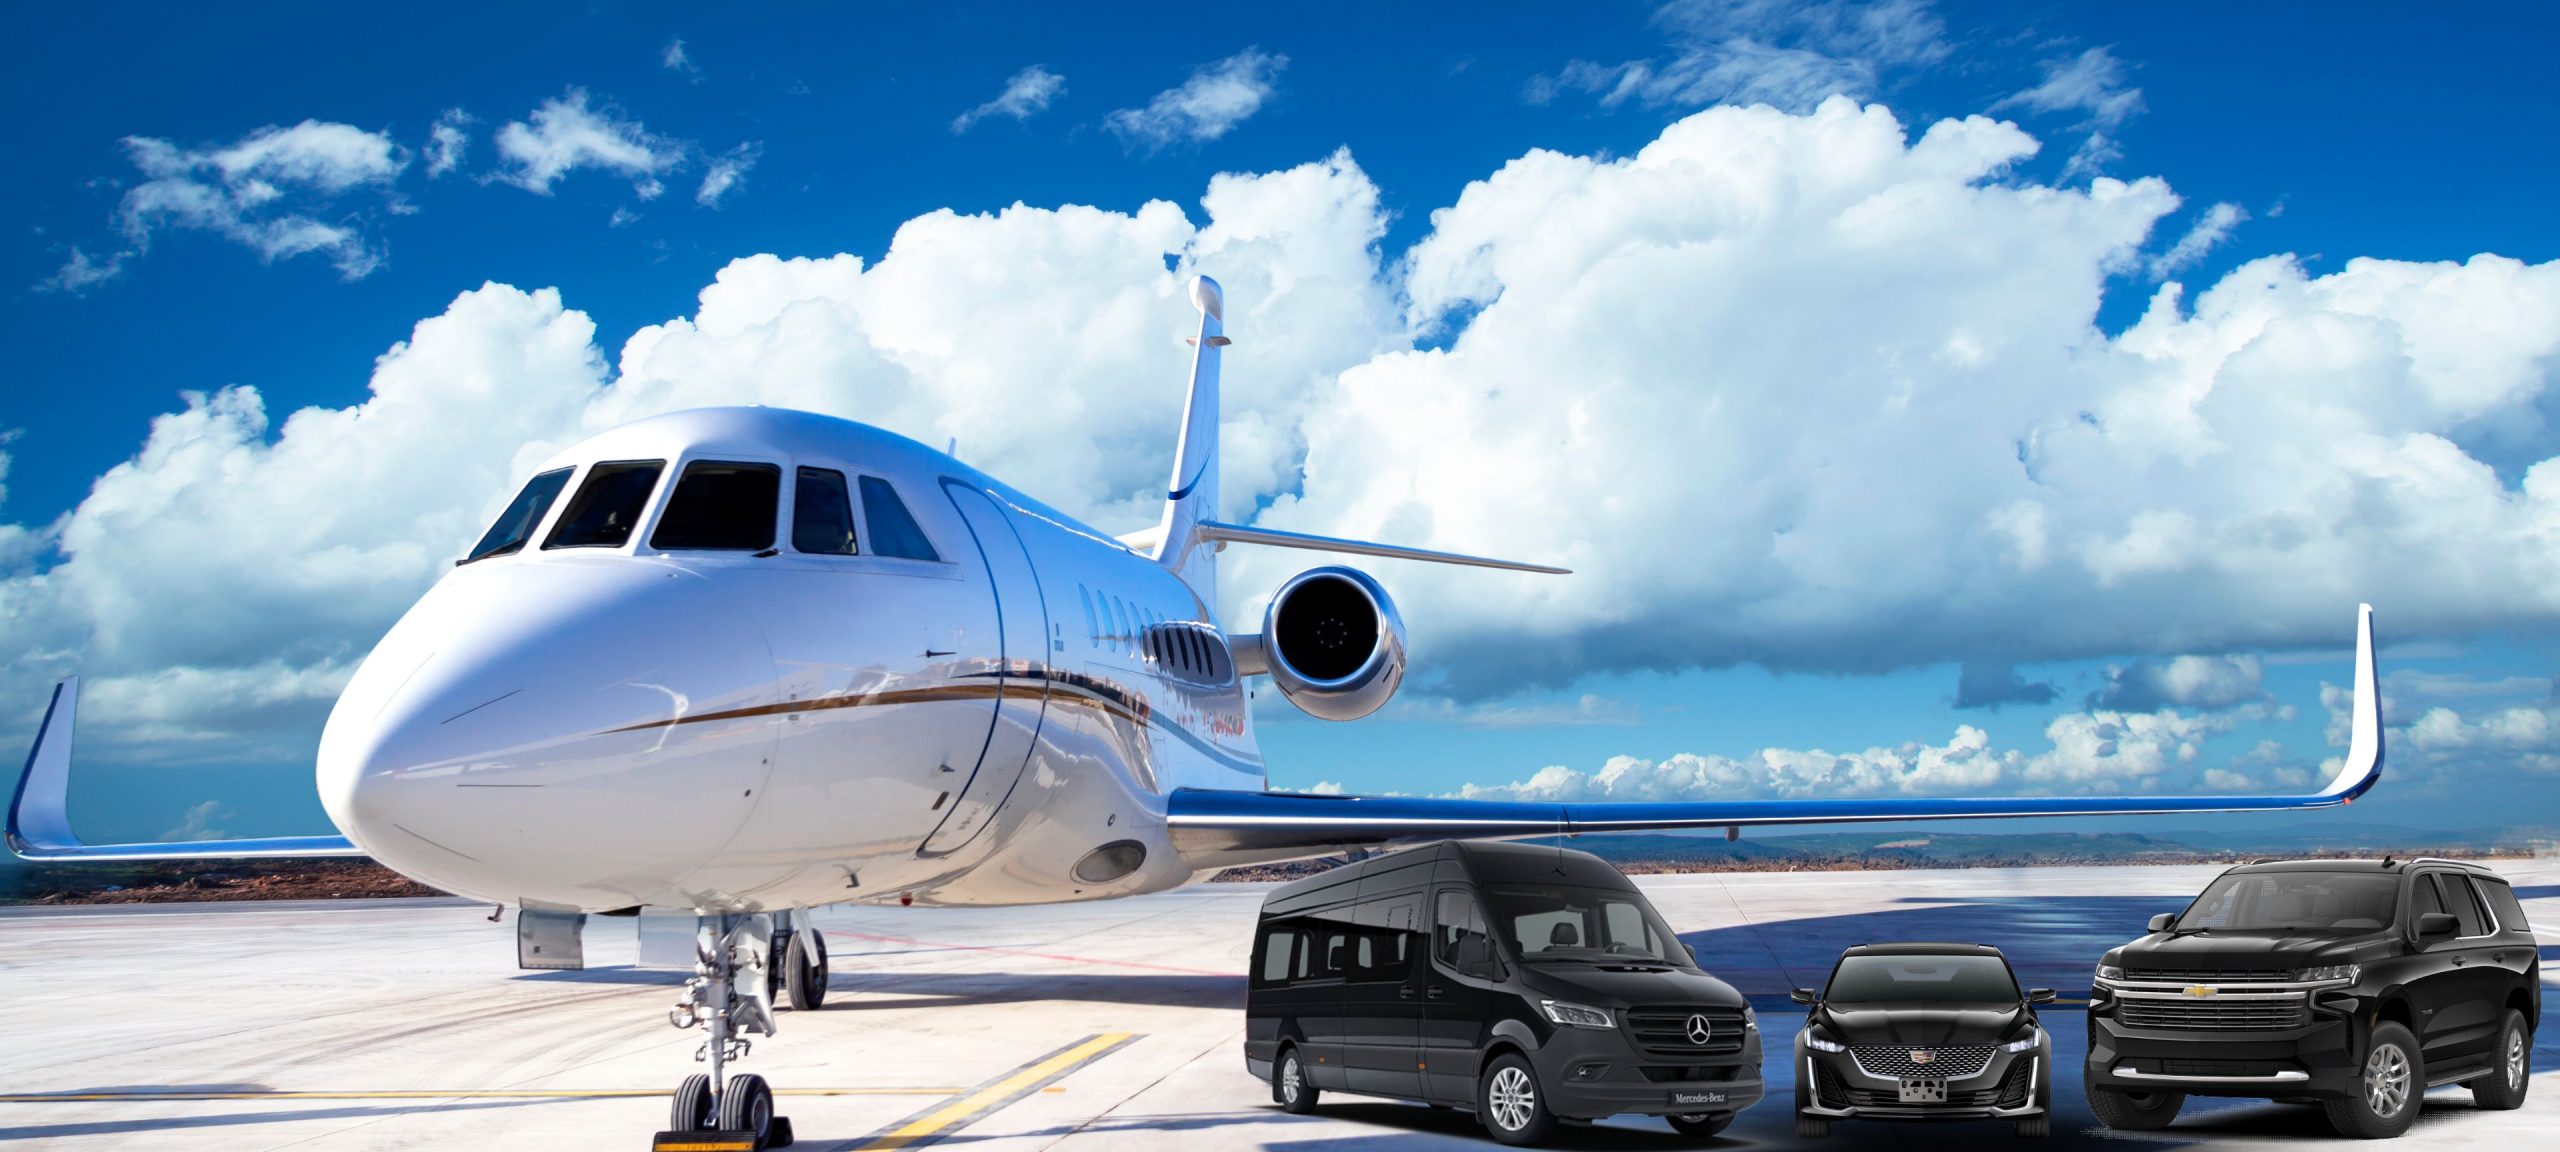 orlando airport transportation transfers car service